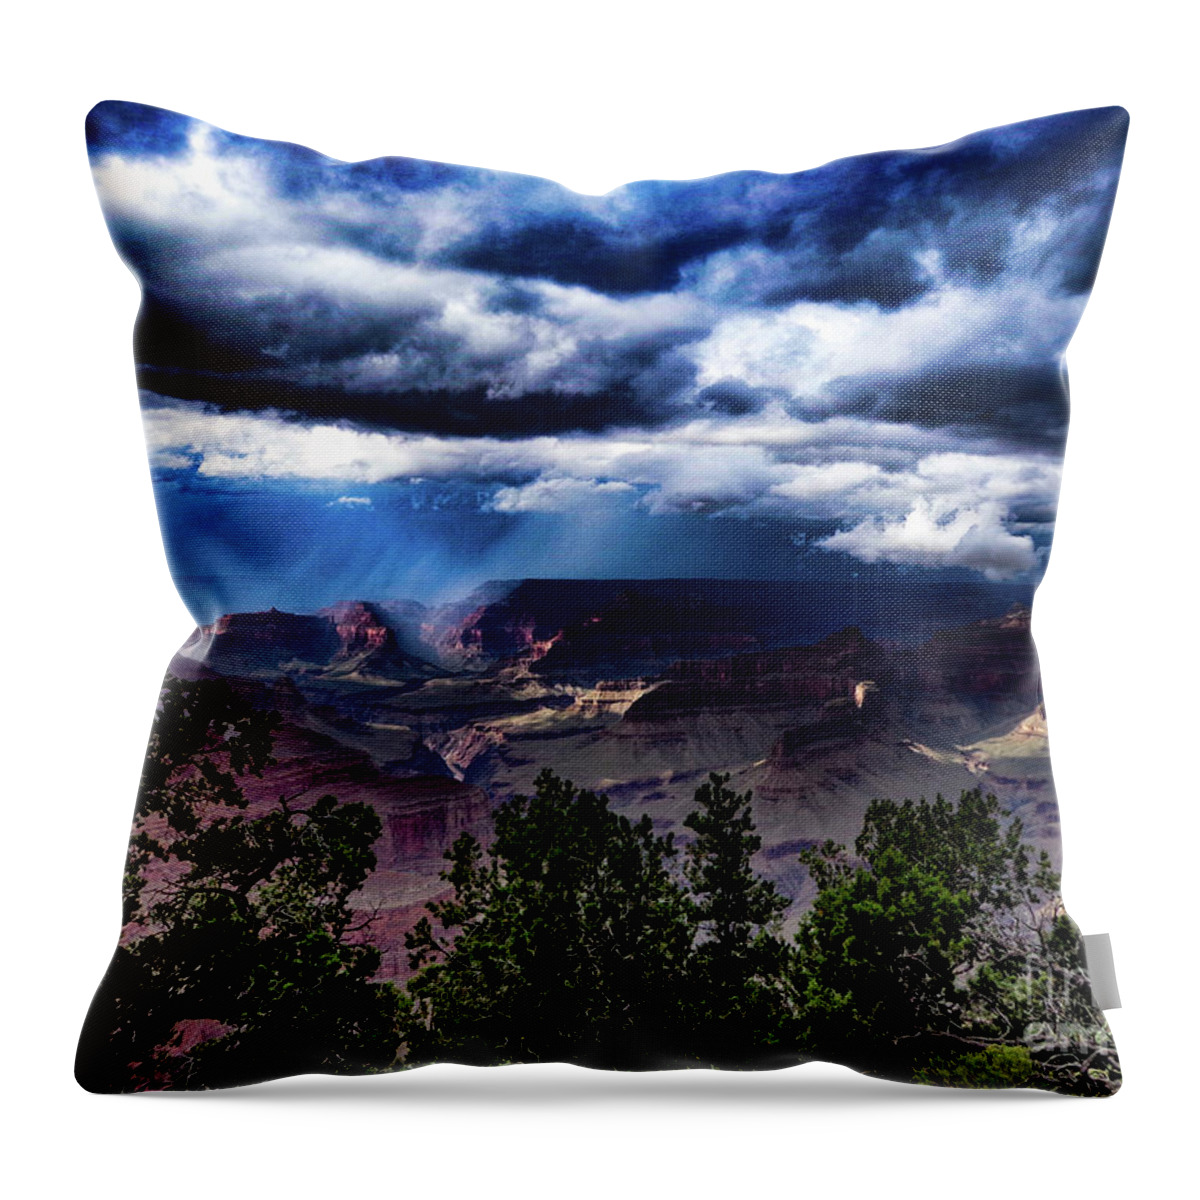 Landscape Throw Pillow featuring the photograph Canyon Rains by Adam Morsa